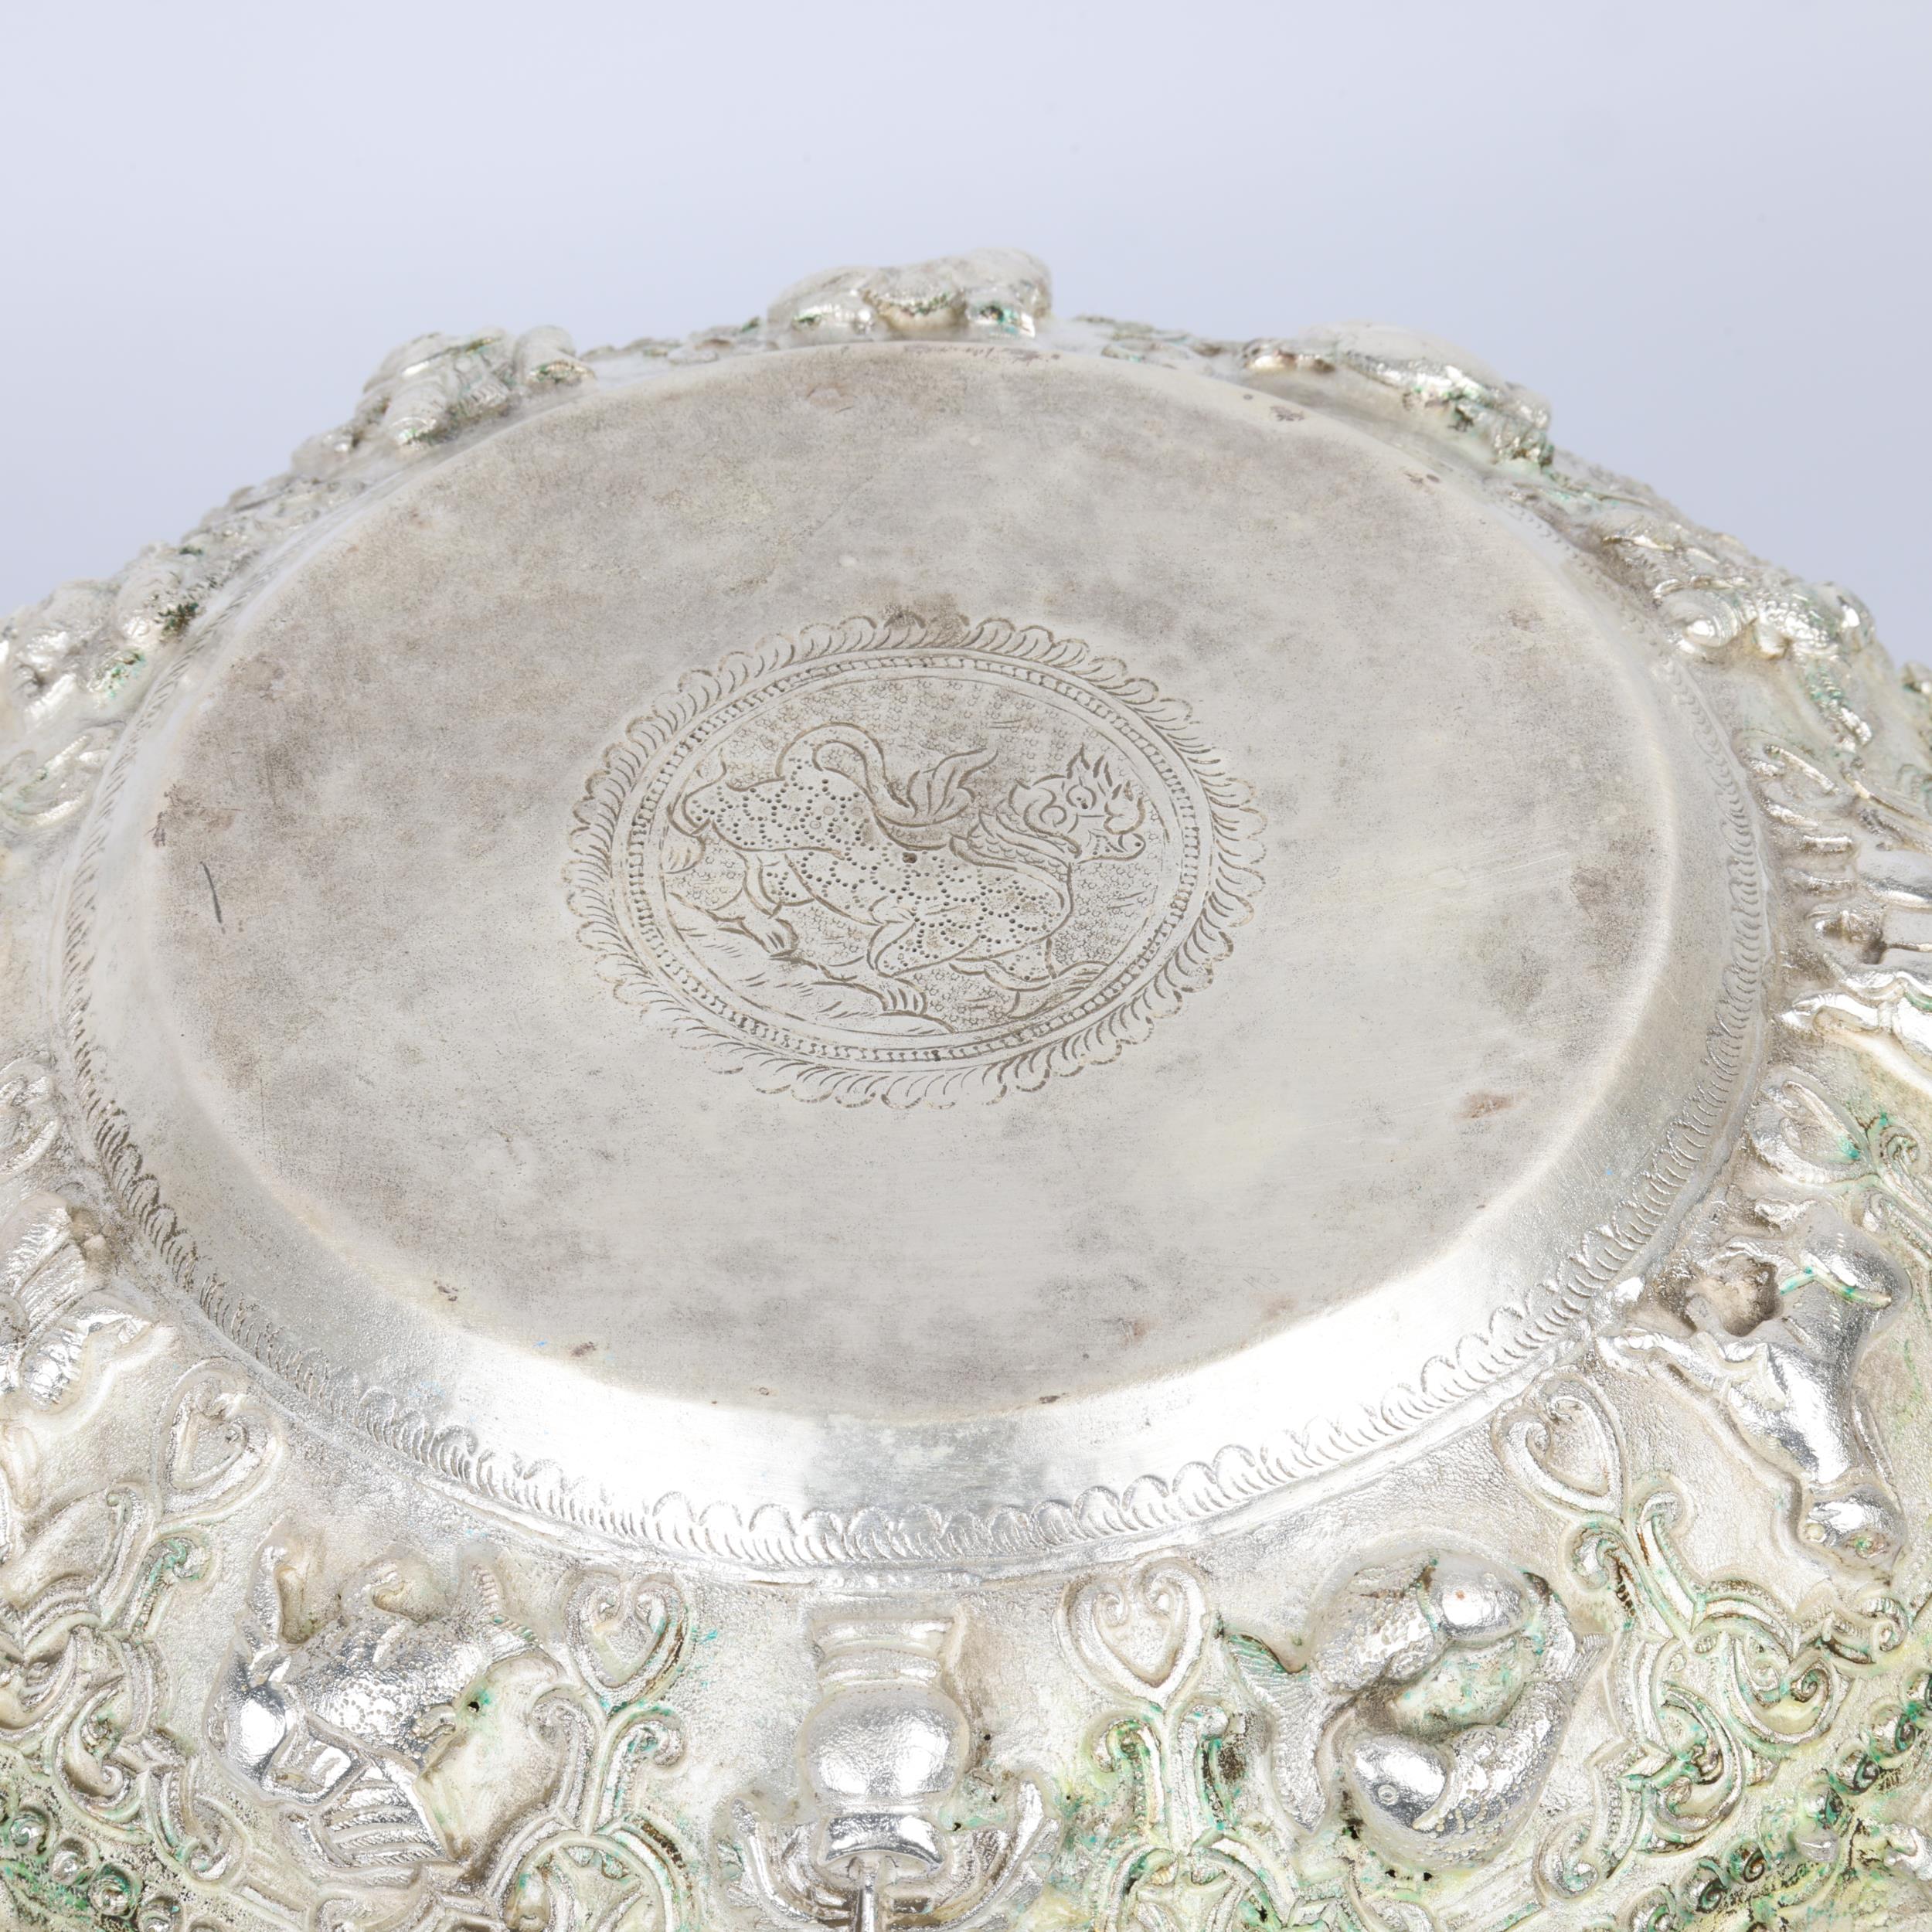 A Fine and Large Burmese silver Thabeik rice bowl, lion maker's mark, Rangoon circa 1900, circular - Image 2 of 3